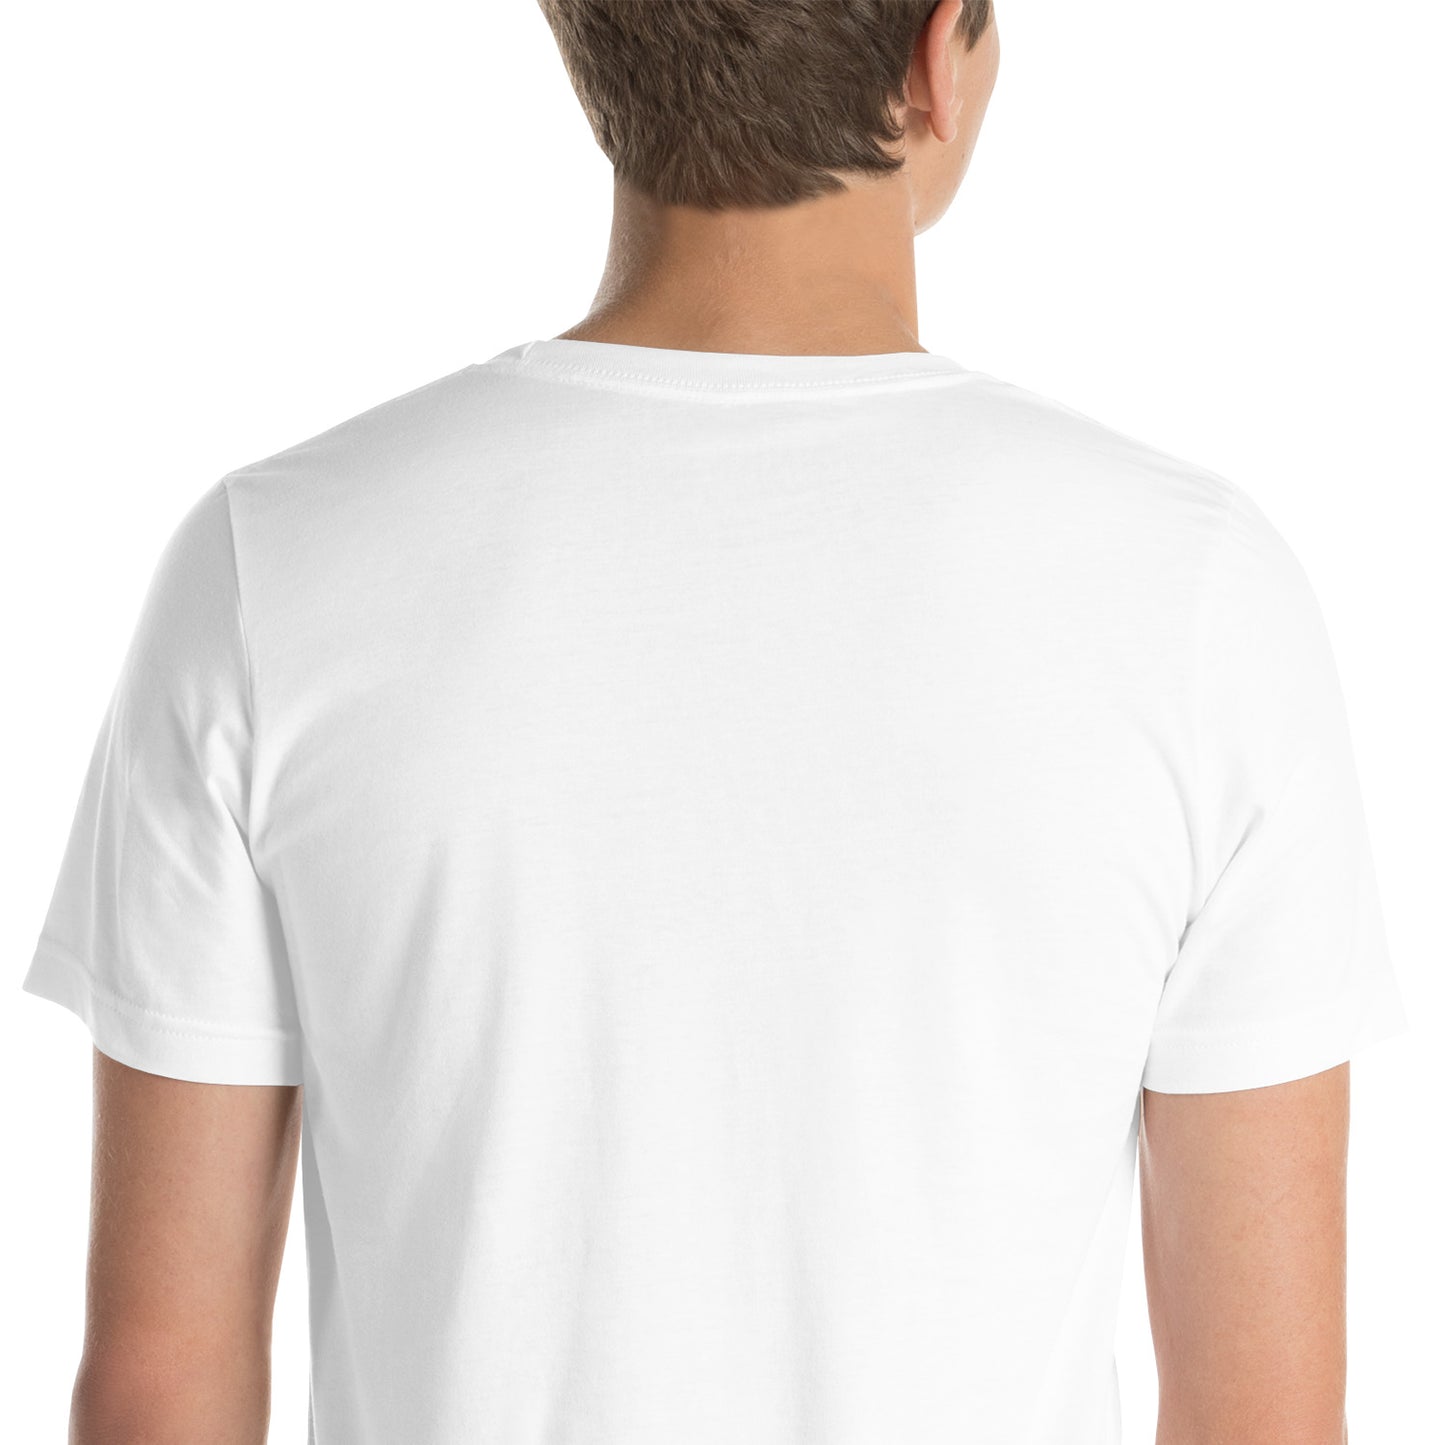 TWO GOATS - Unisex t-shirt